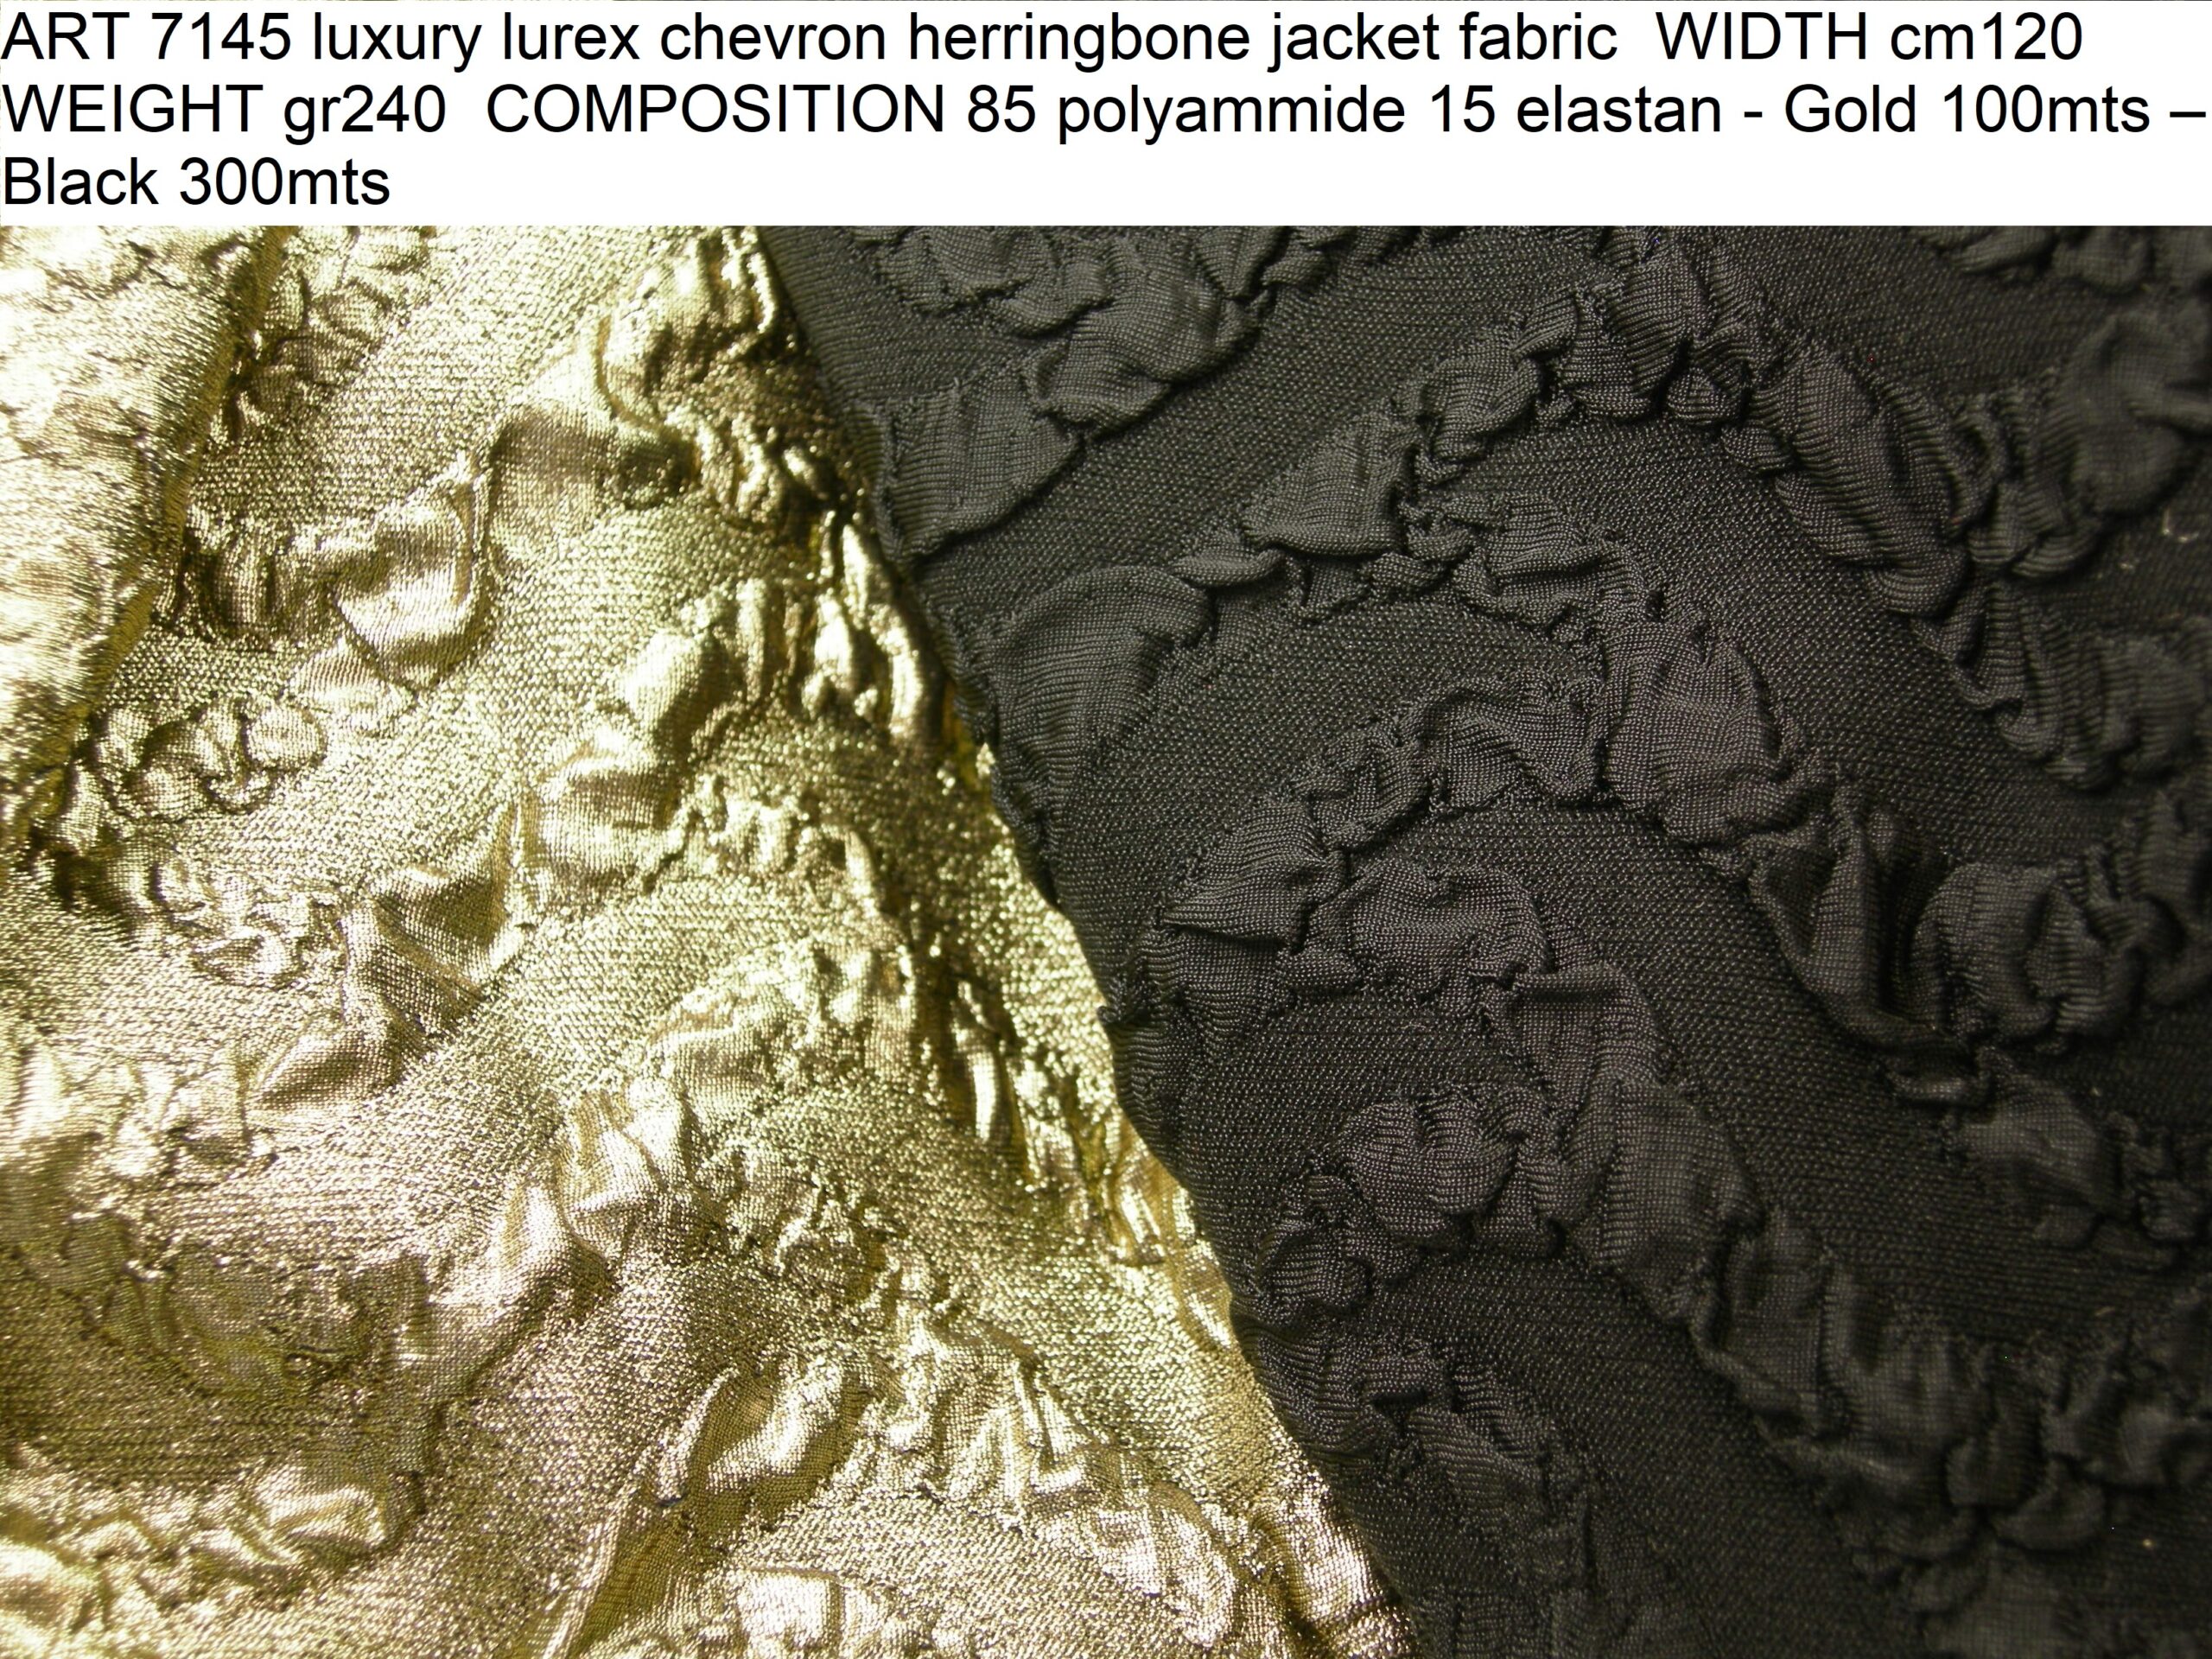 ART 7145 luxury lurex chevron herringbone jacket fabric WIDTH cm120 WEIGHT gr240 COMPOSITION 85 polyammide 15 elastan - Gold 100mts – Black 300mts